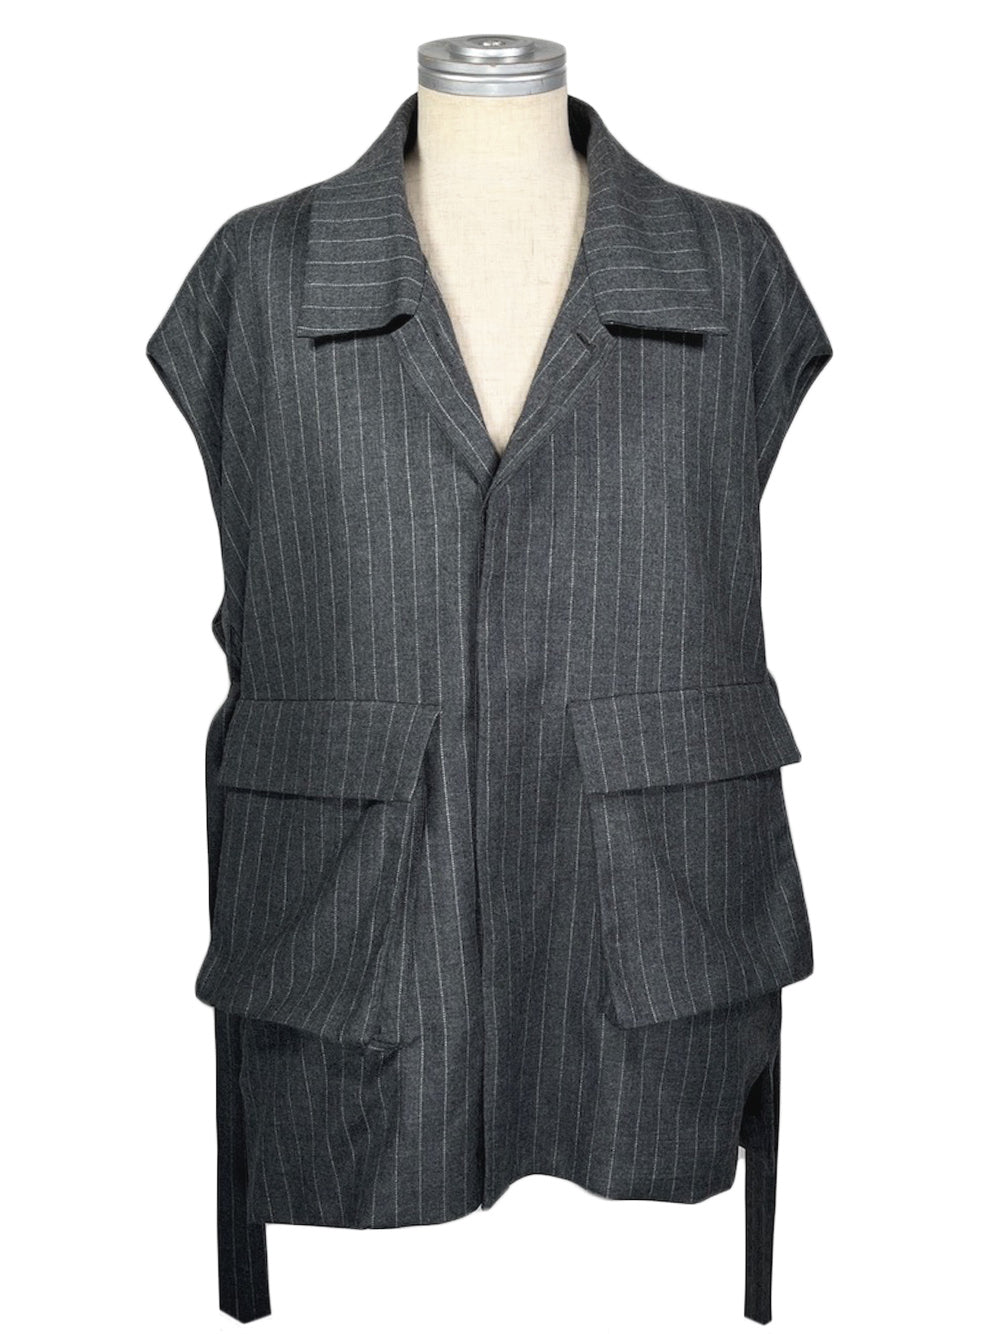 LB23AW-MJK01-GST | Striped wool serge detachable field jacket | GRAY STRIPE 